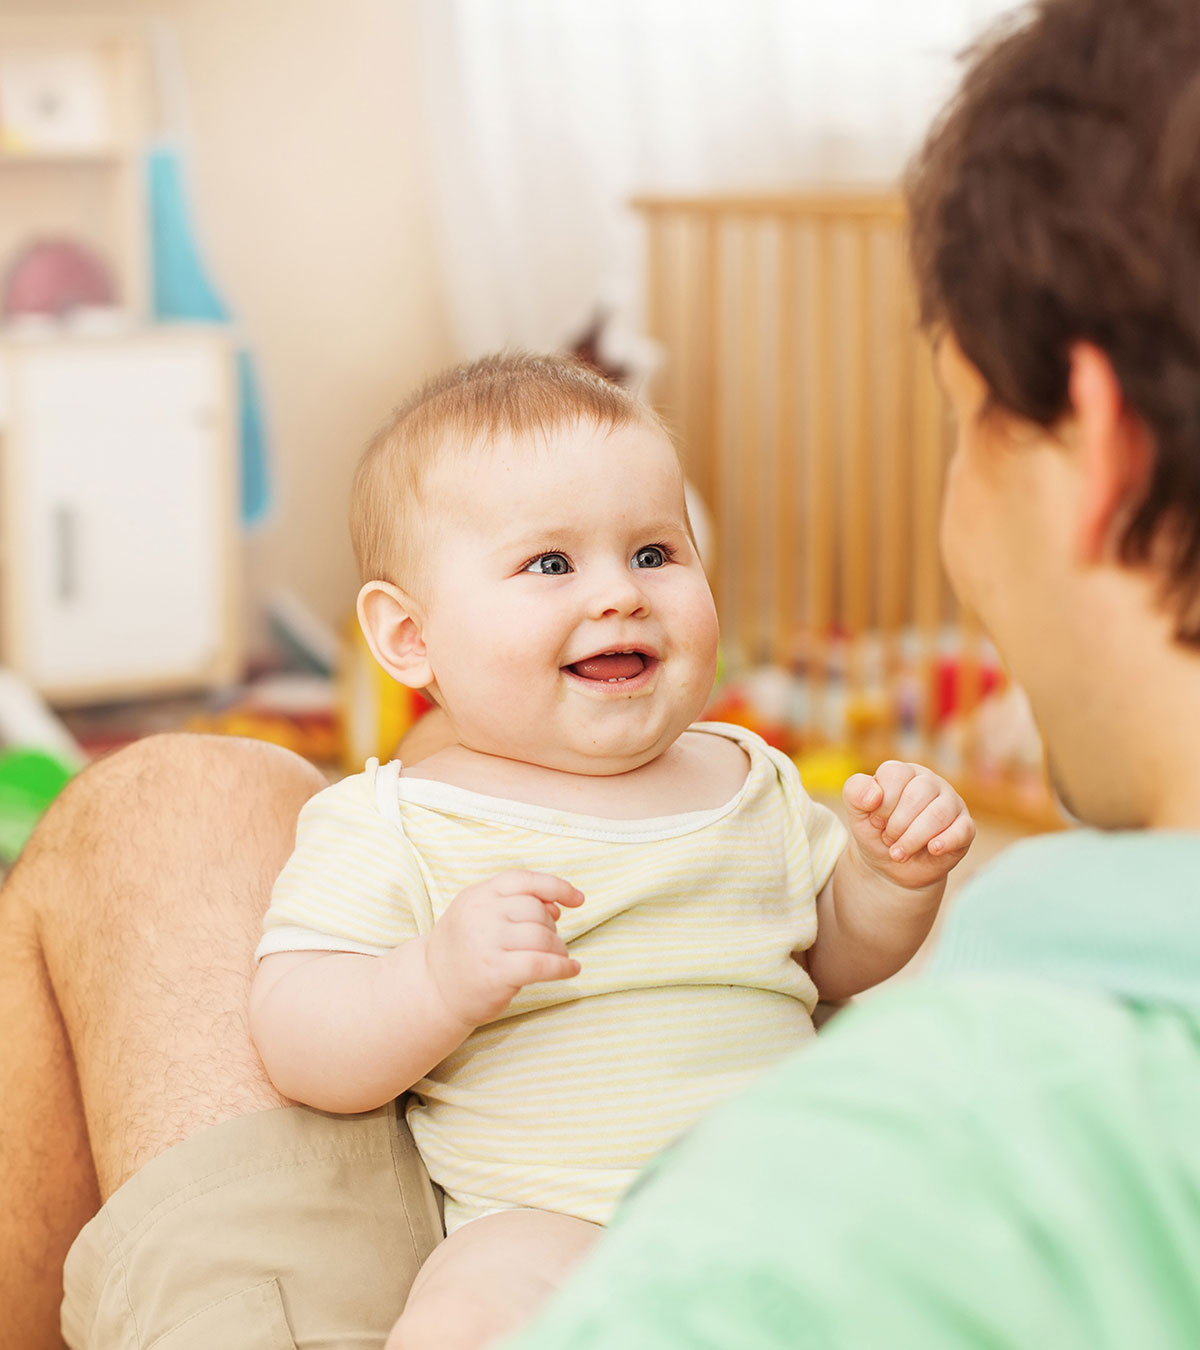 When Do Babies Start Hearing After Birth?